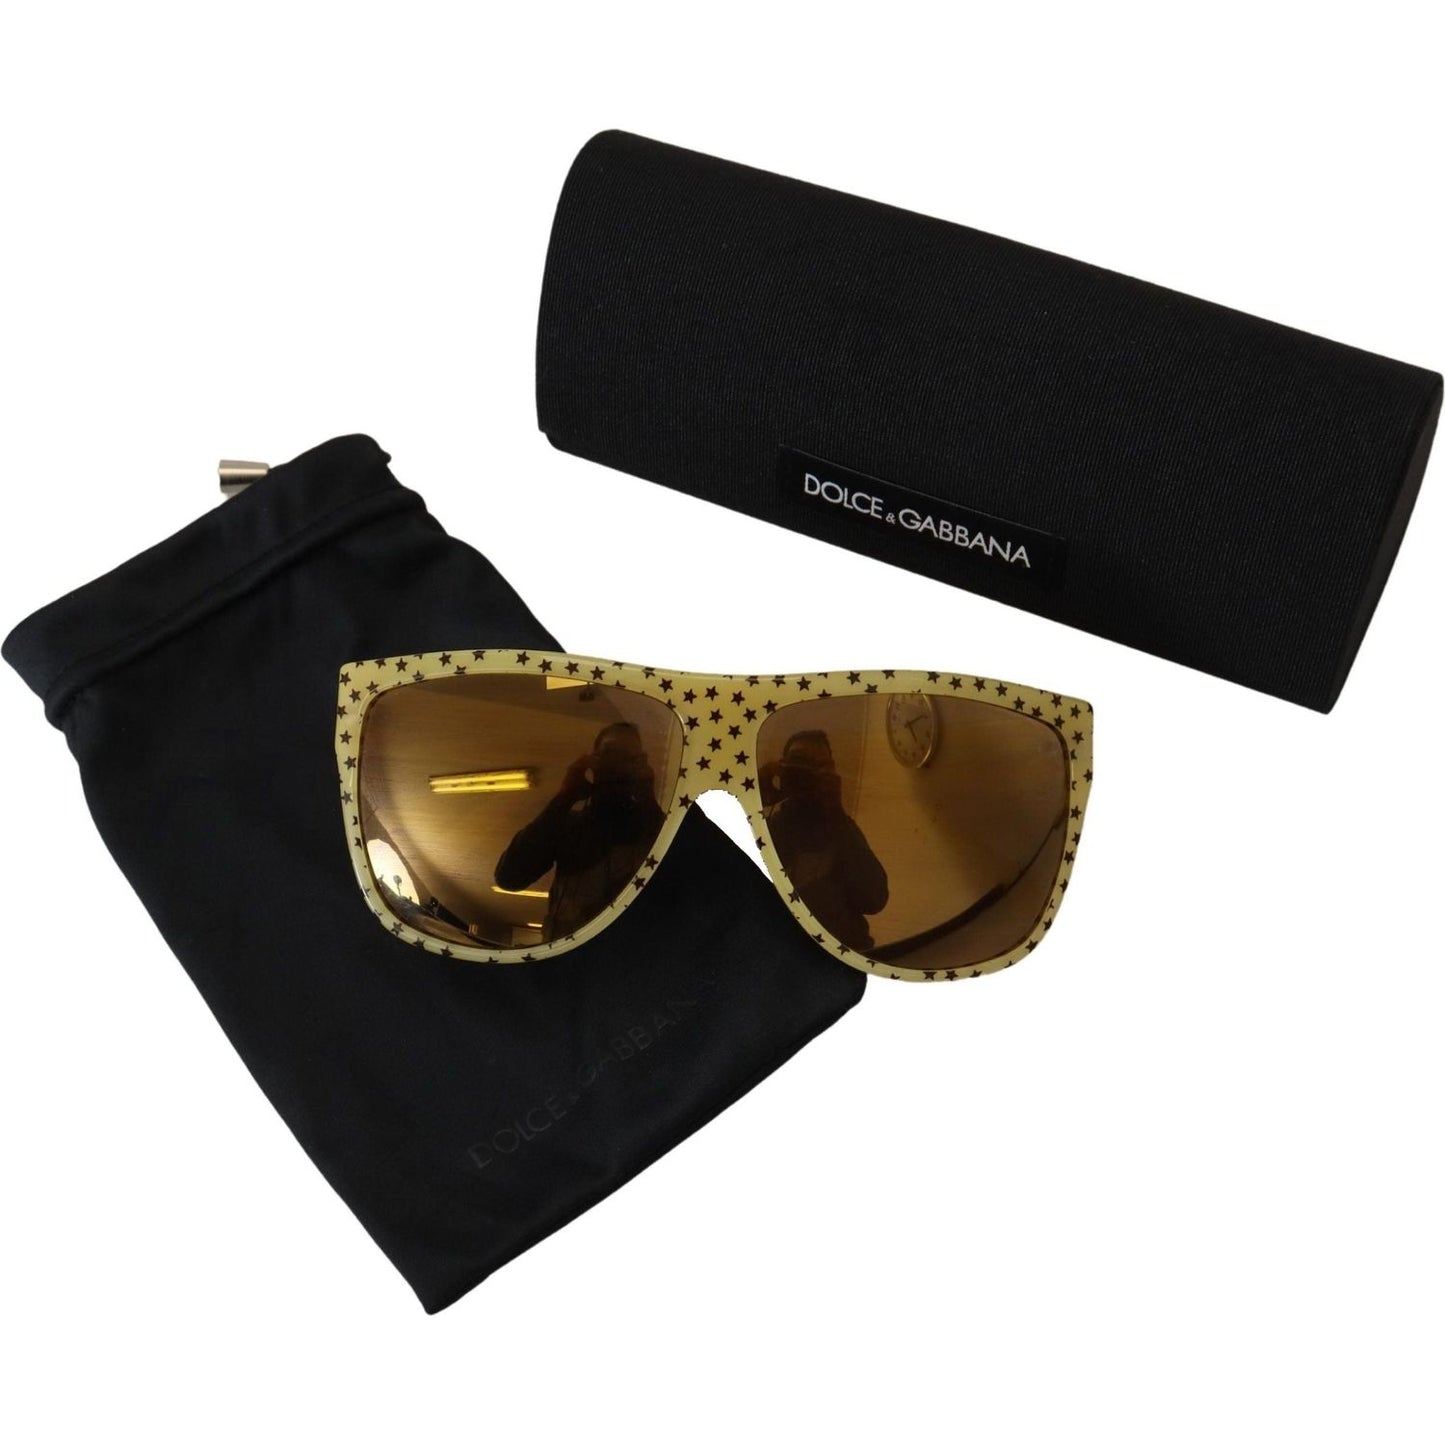 Dolce & Gabbana Stellar Chic Square Sunglasses in Yellow yellow-stars-acetate-square-shades-dg4125-sunglasses